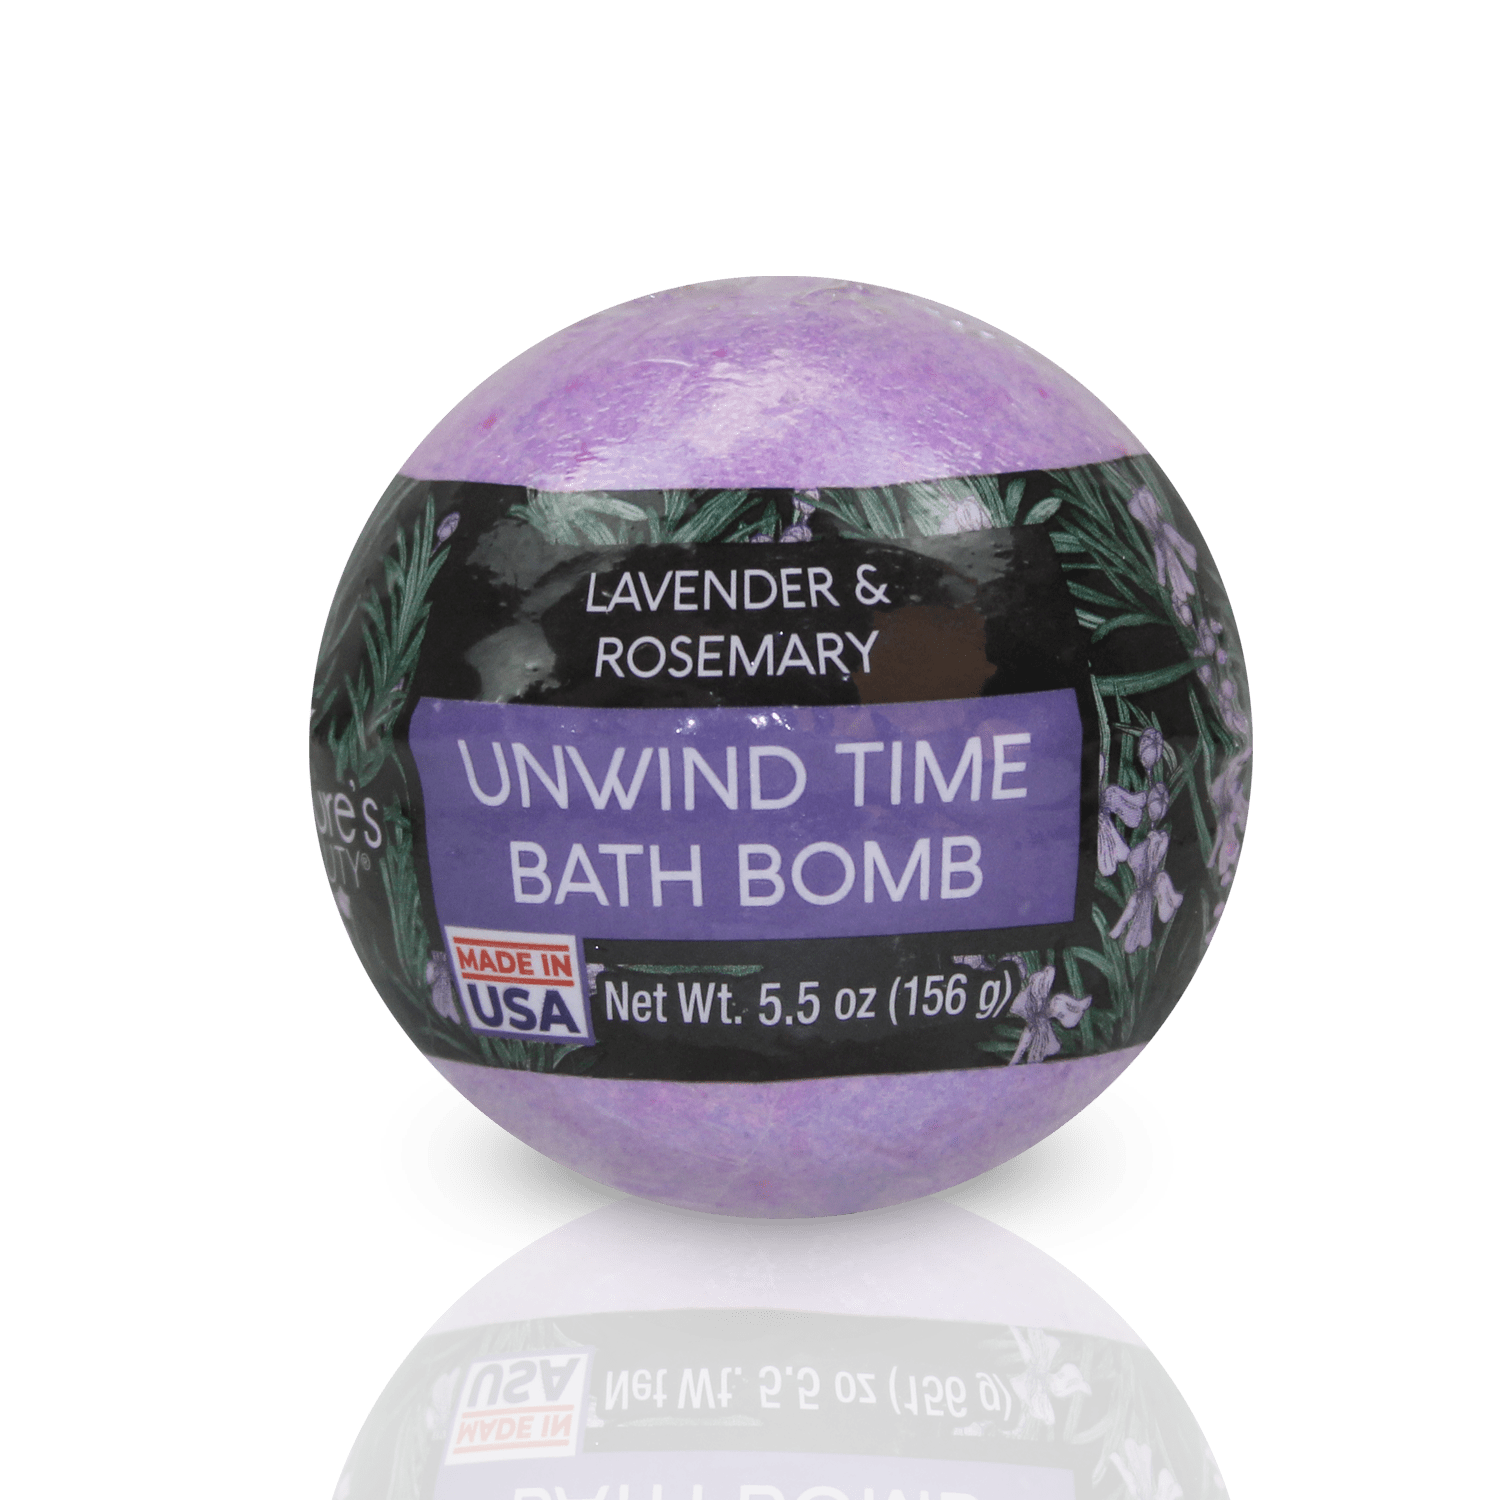 Lavender & Rosemary Nature's Beauty Body Care Single 